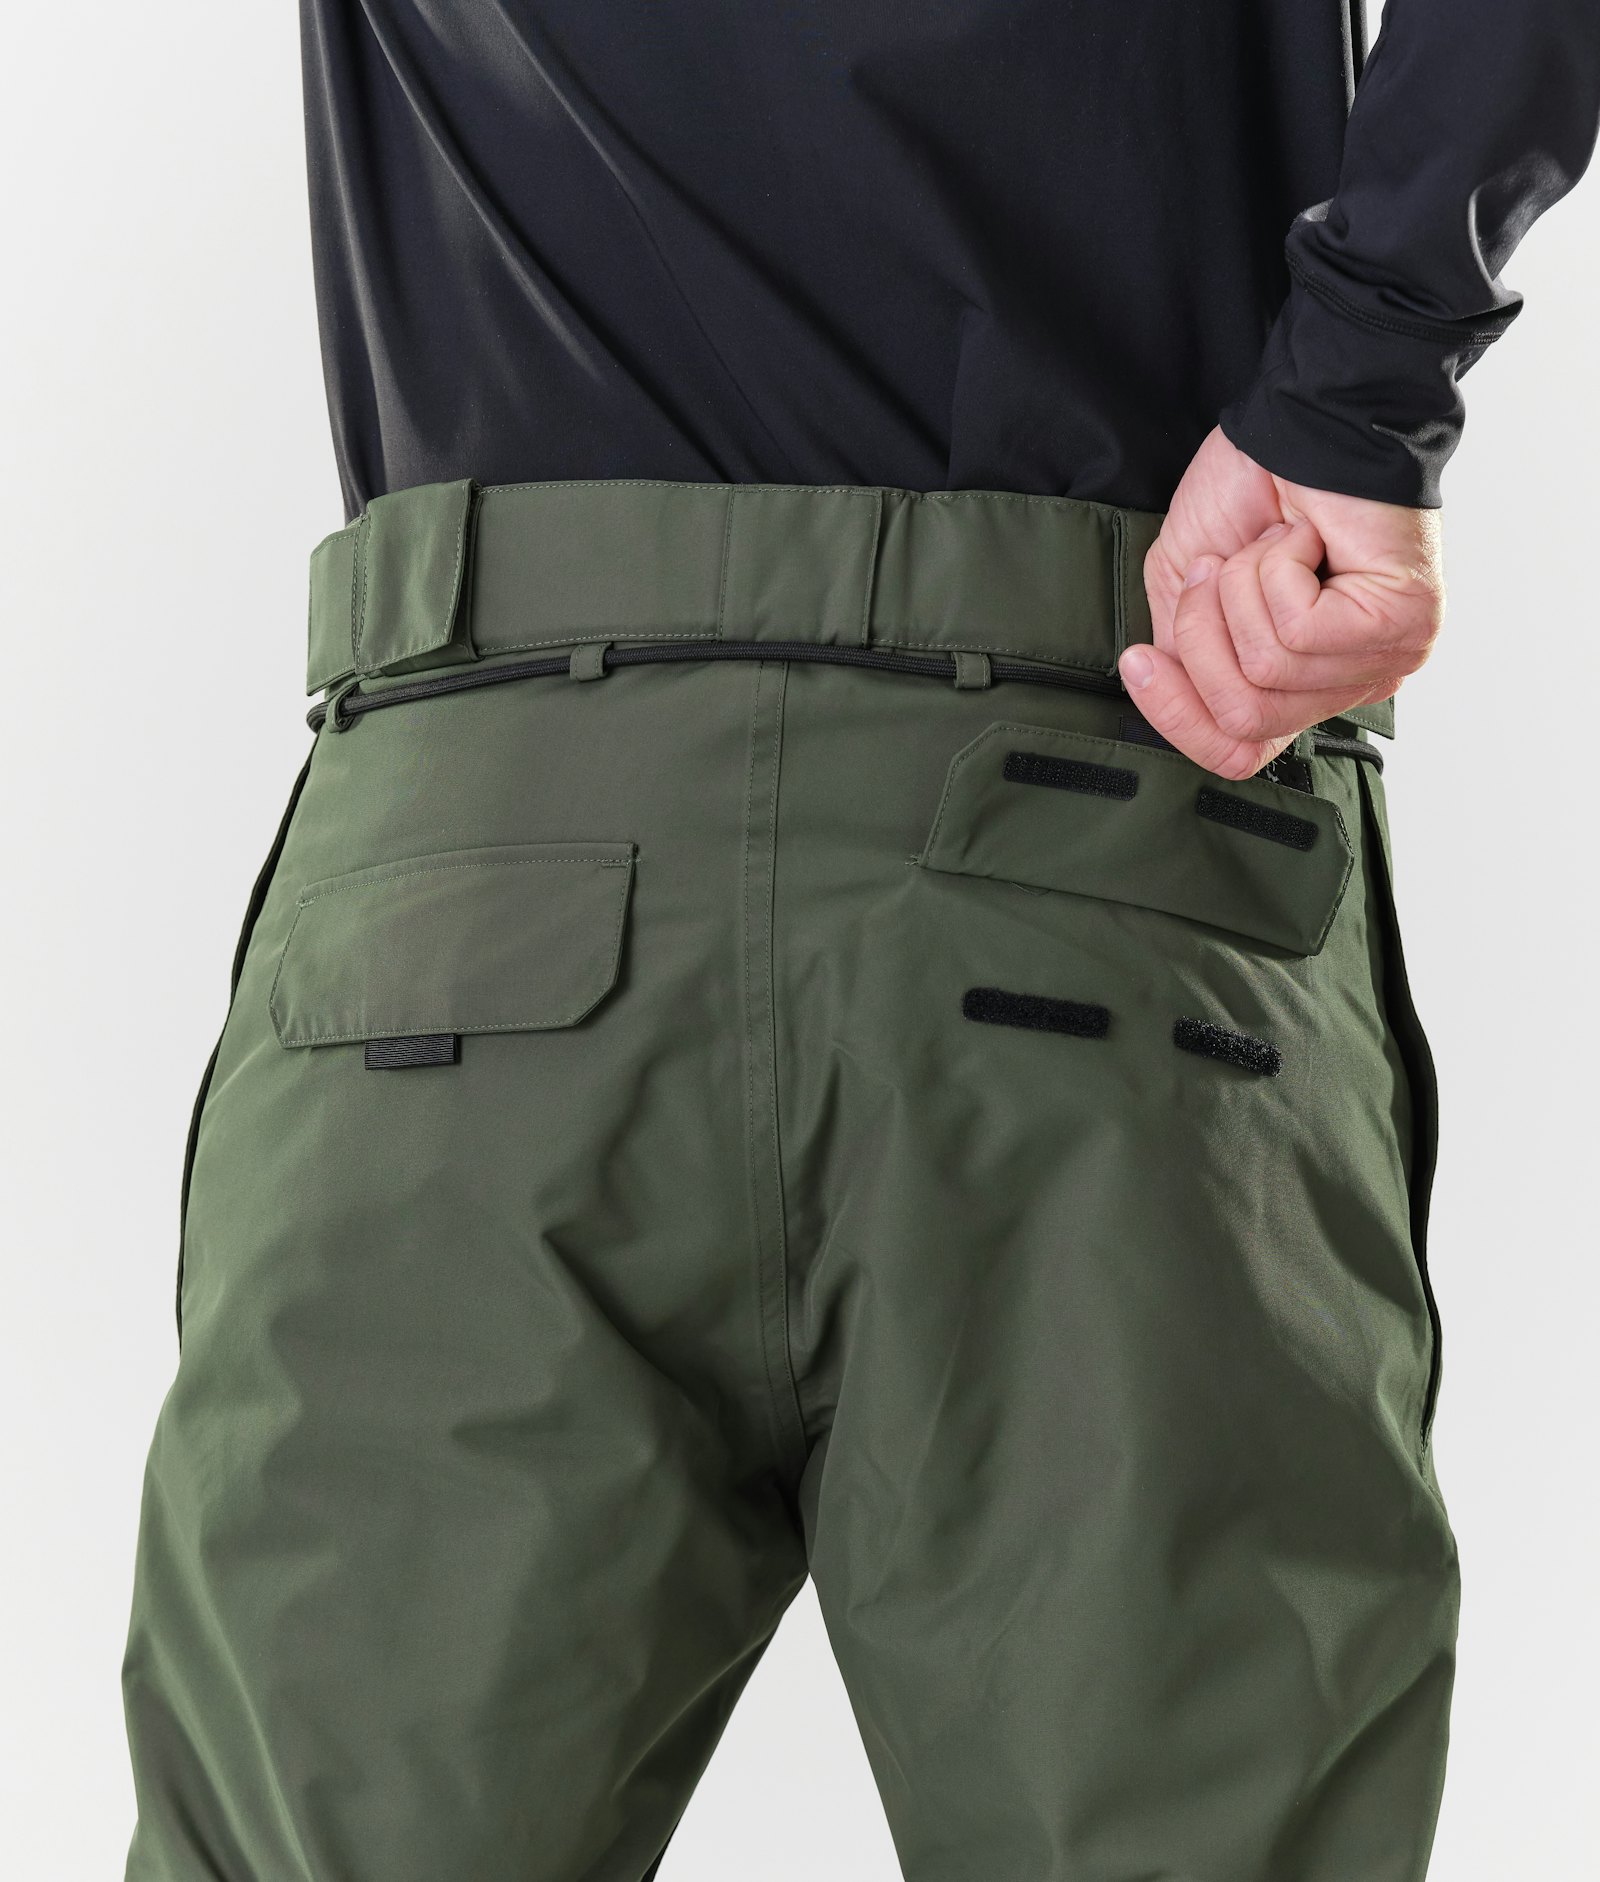 Poise Pantalon de Ski Homme Olive Green/Black